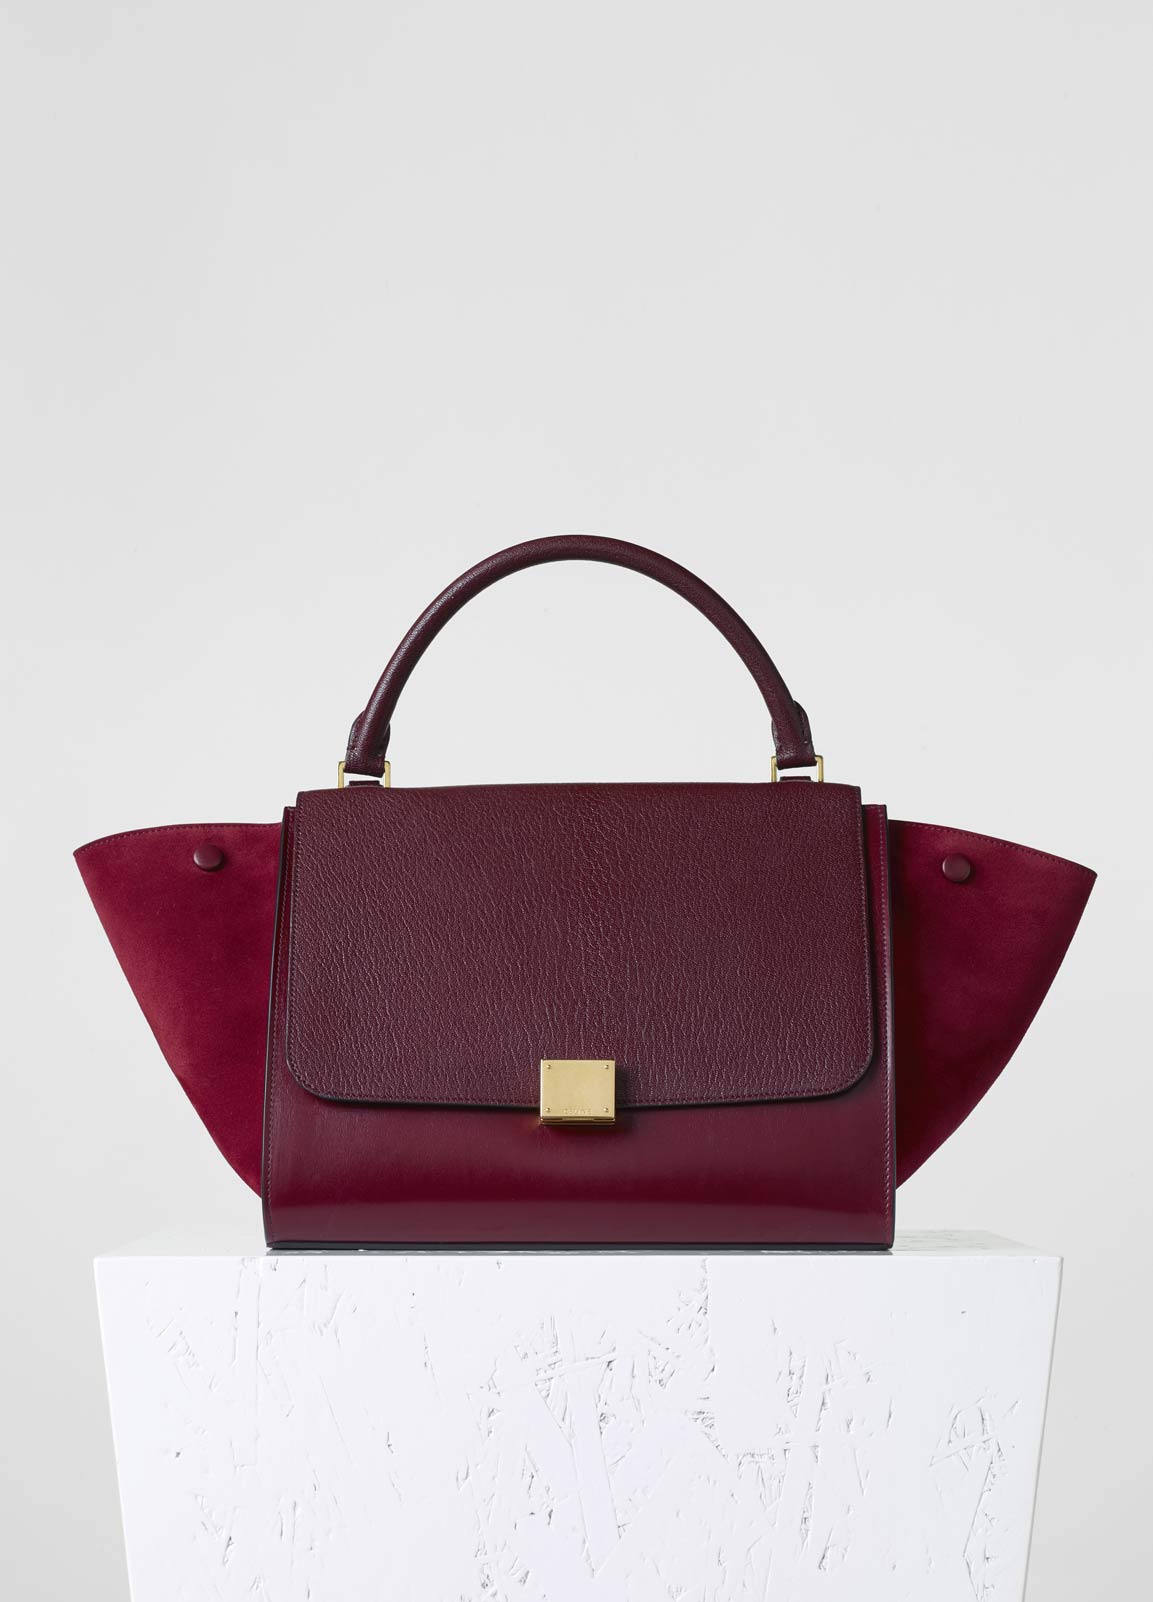 where can i buy a celine bag, celine handbags online shop usa